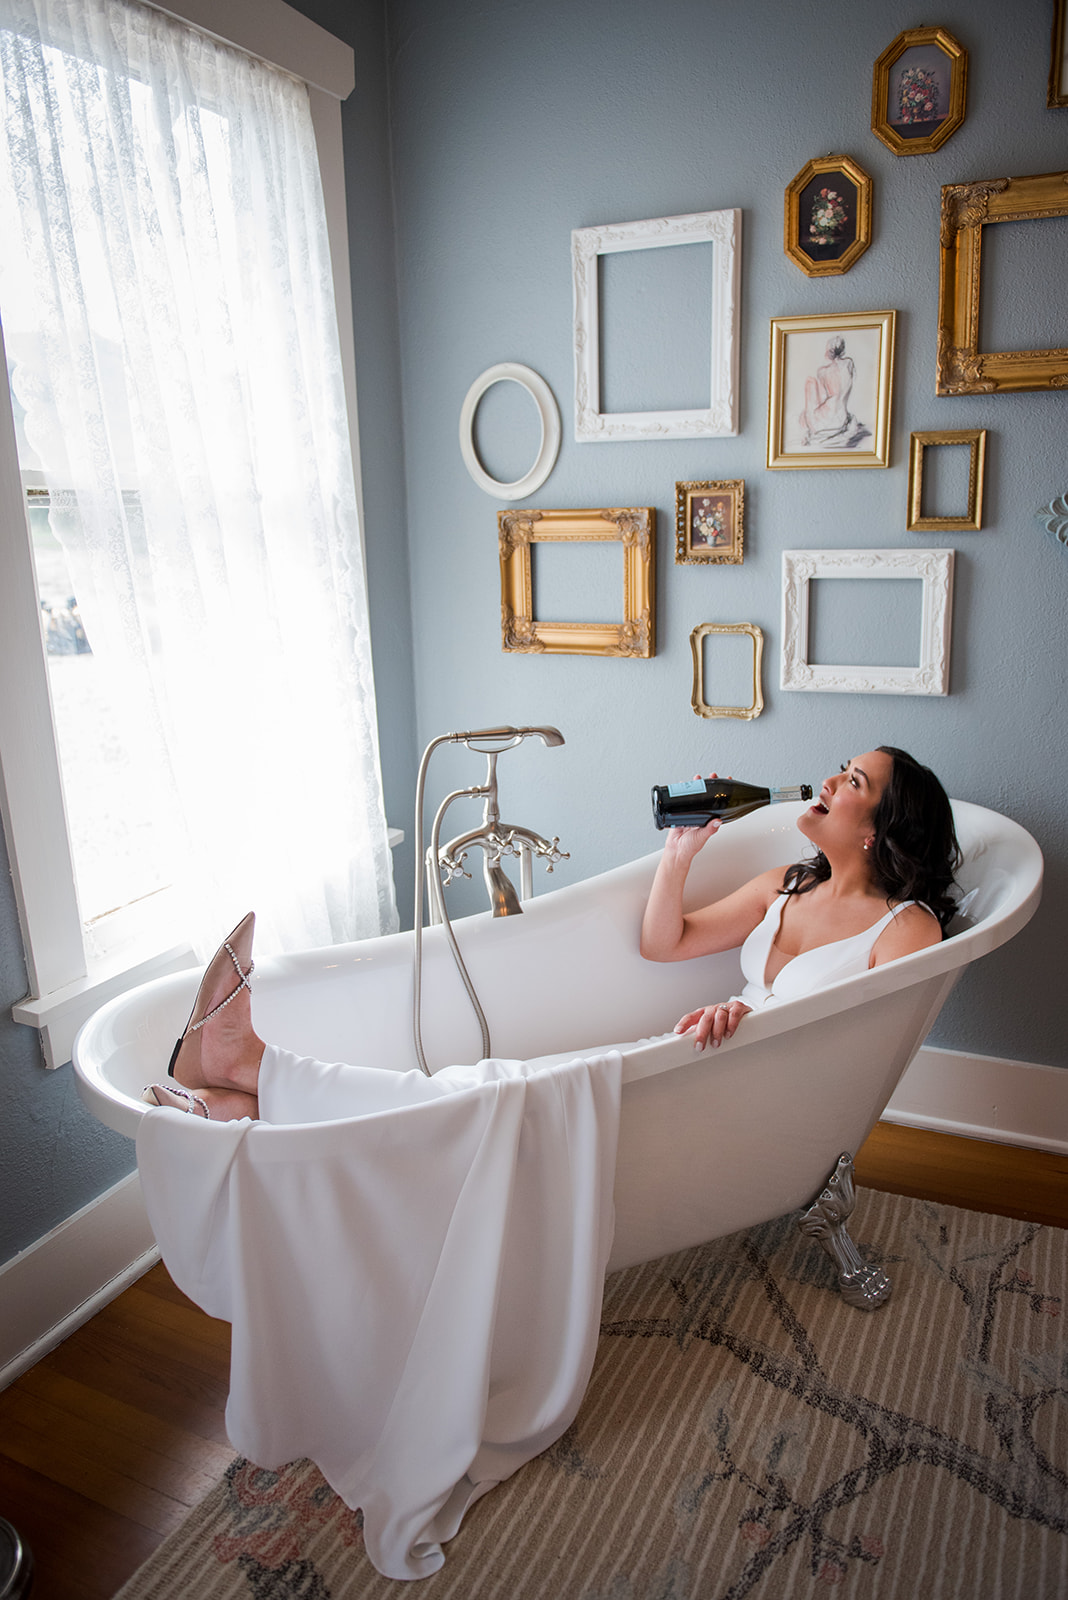 Bride lays in clawfoot bathtub in her wedding dress drinking a bottle of champagne.